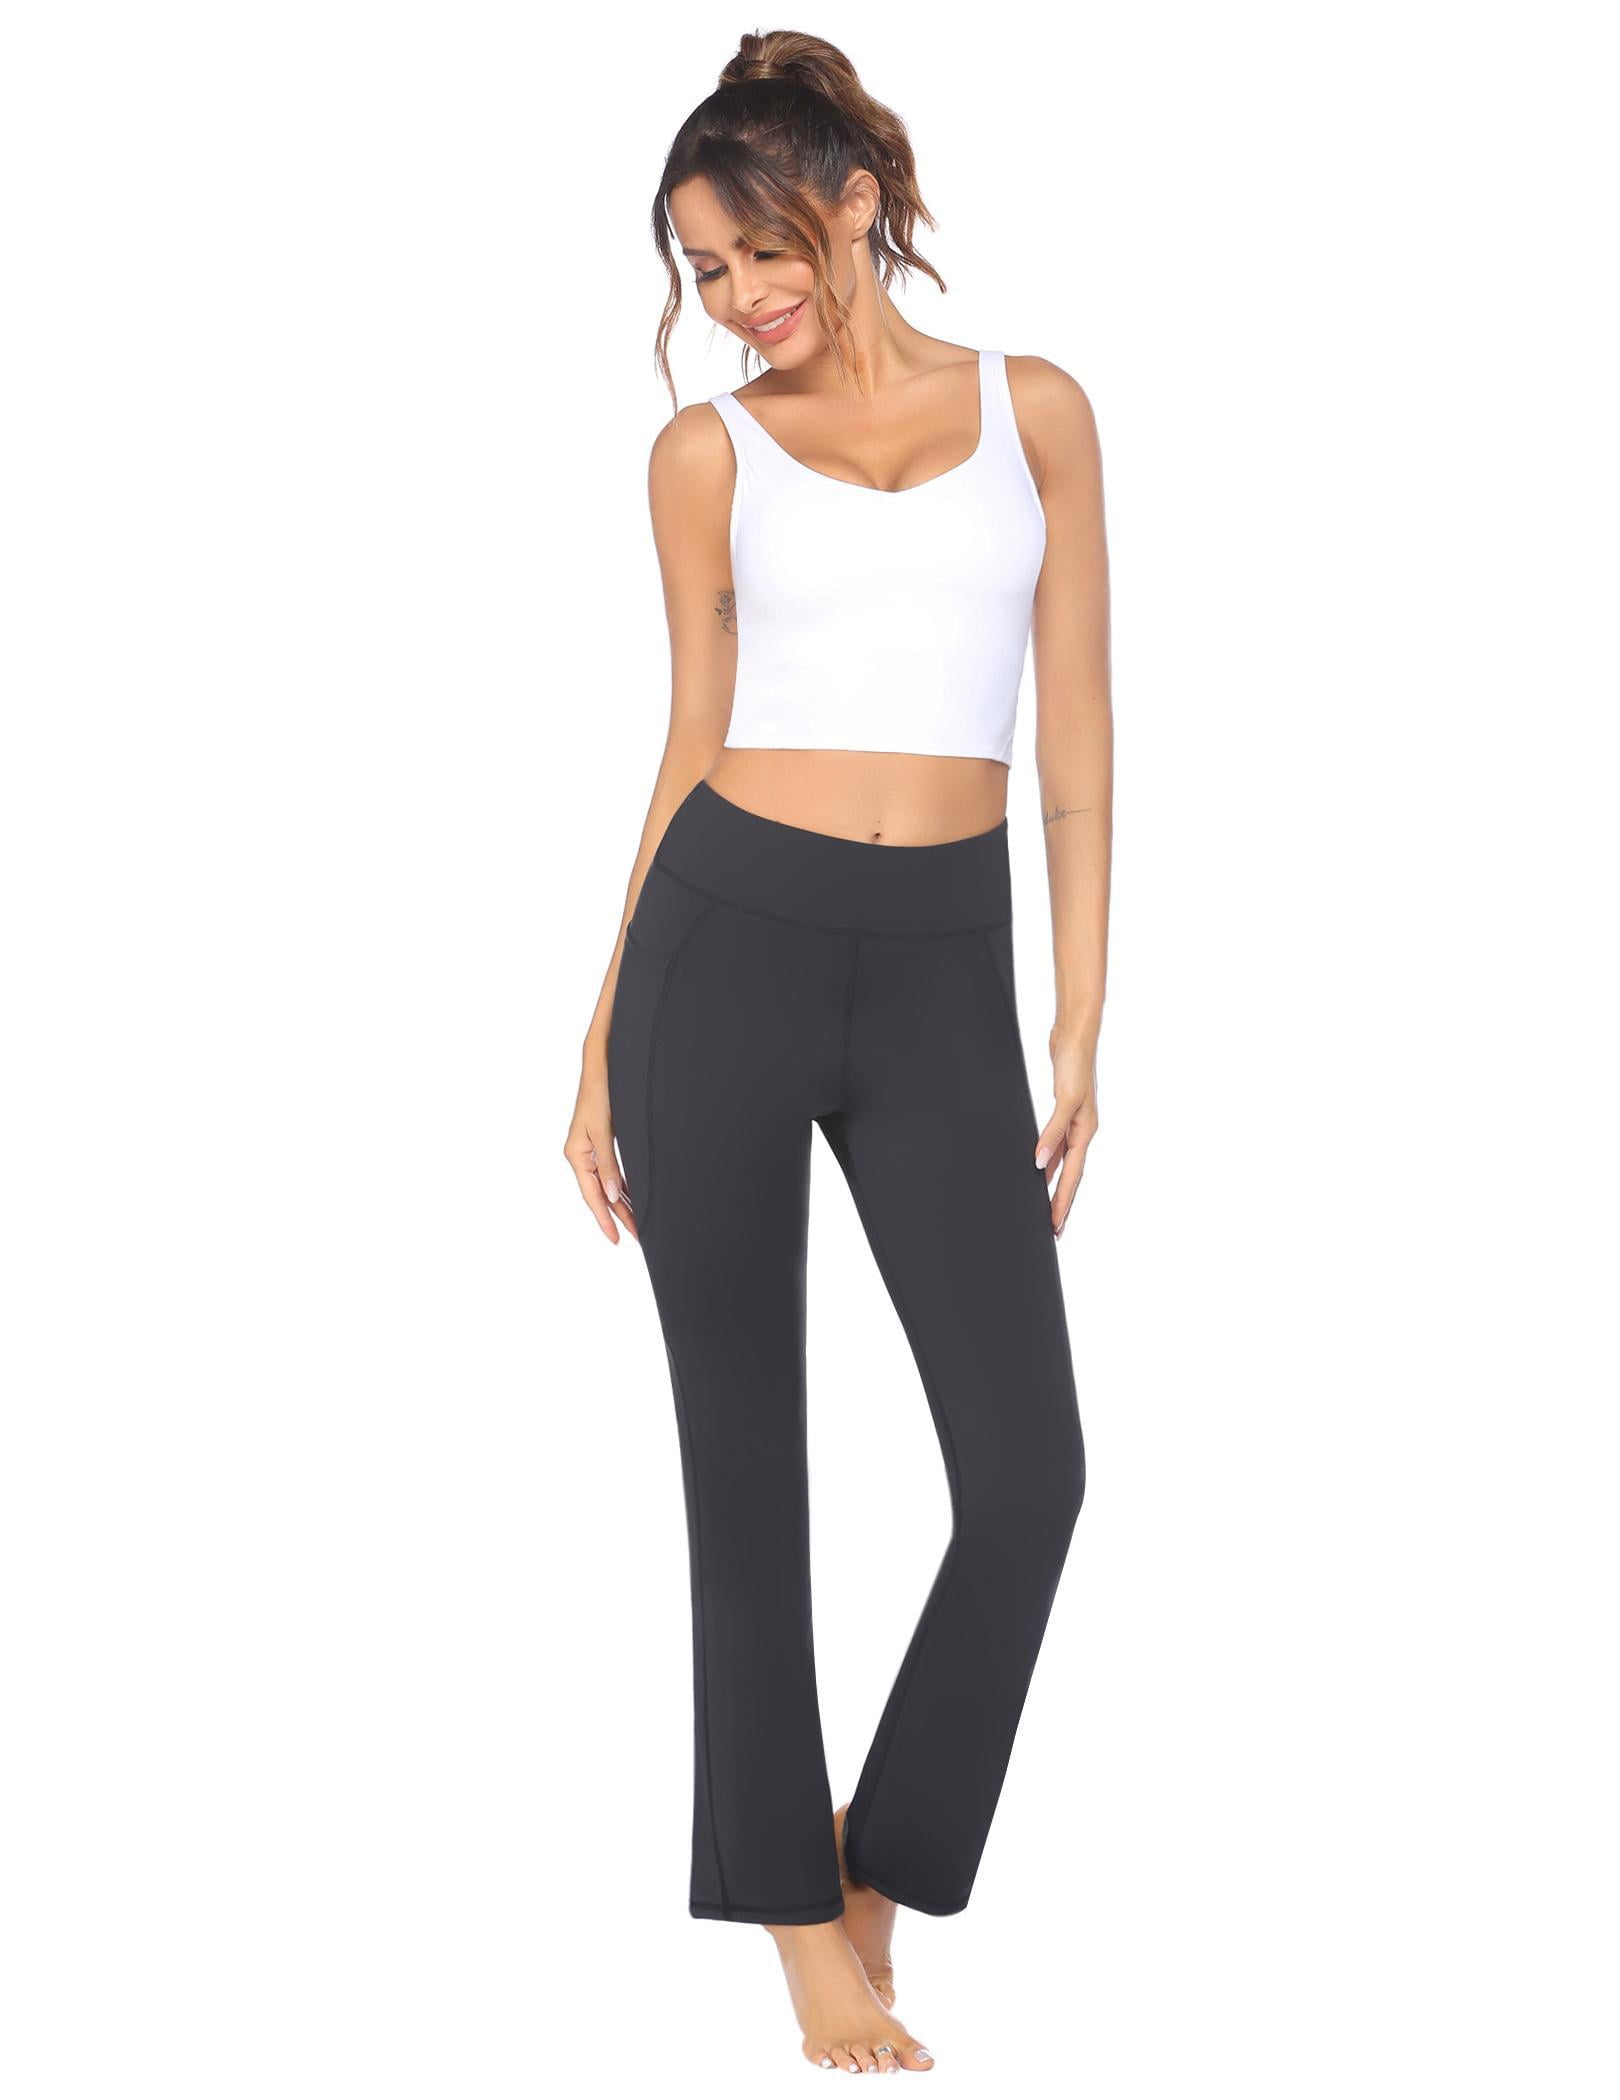 Kiyotoo Bootcut Yoga Pants Women High Waist Stretch Yoga Pants Basic/Back Pocket/Straight Leg Soft Workout Flare